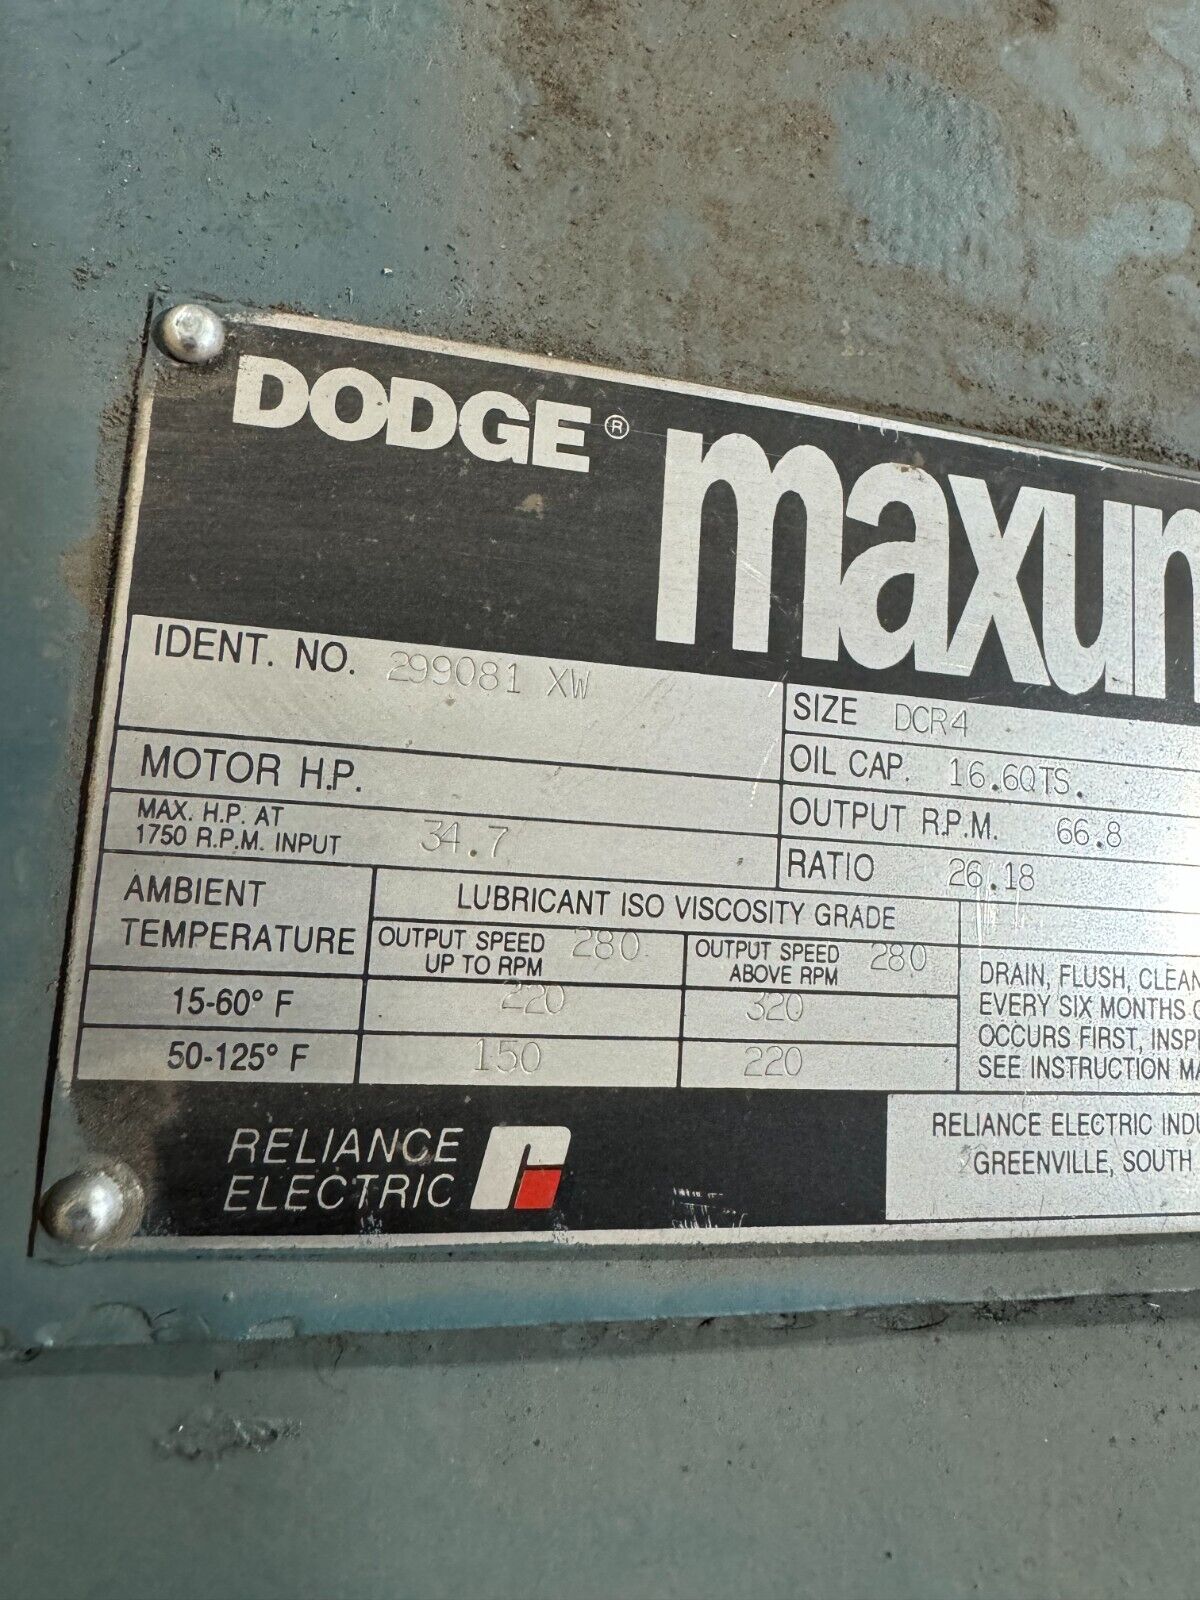 NEW DODGE MAXUM DCR4 GEAR BOX SPEED REDUCER 26.18 RATIO 299081